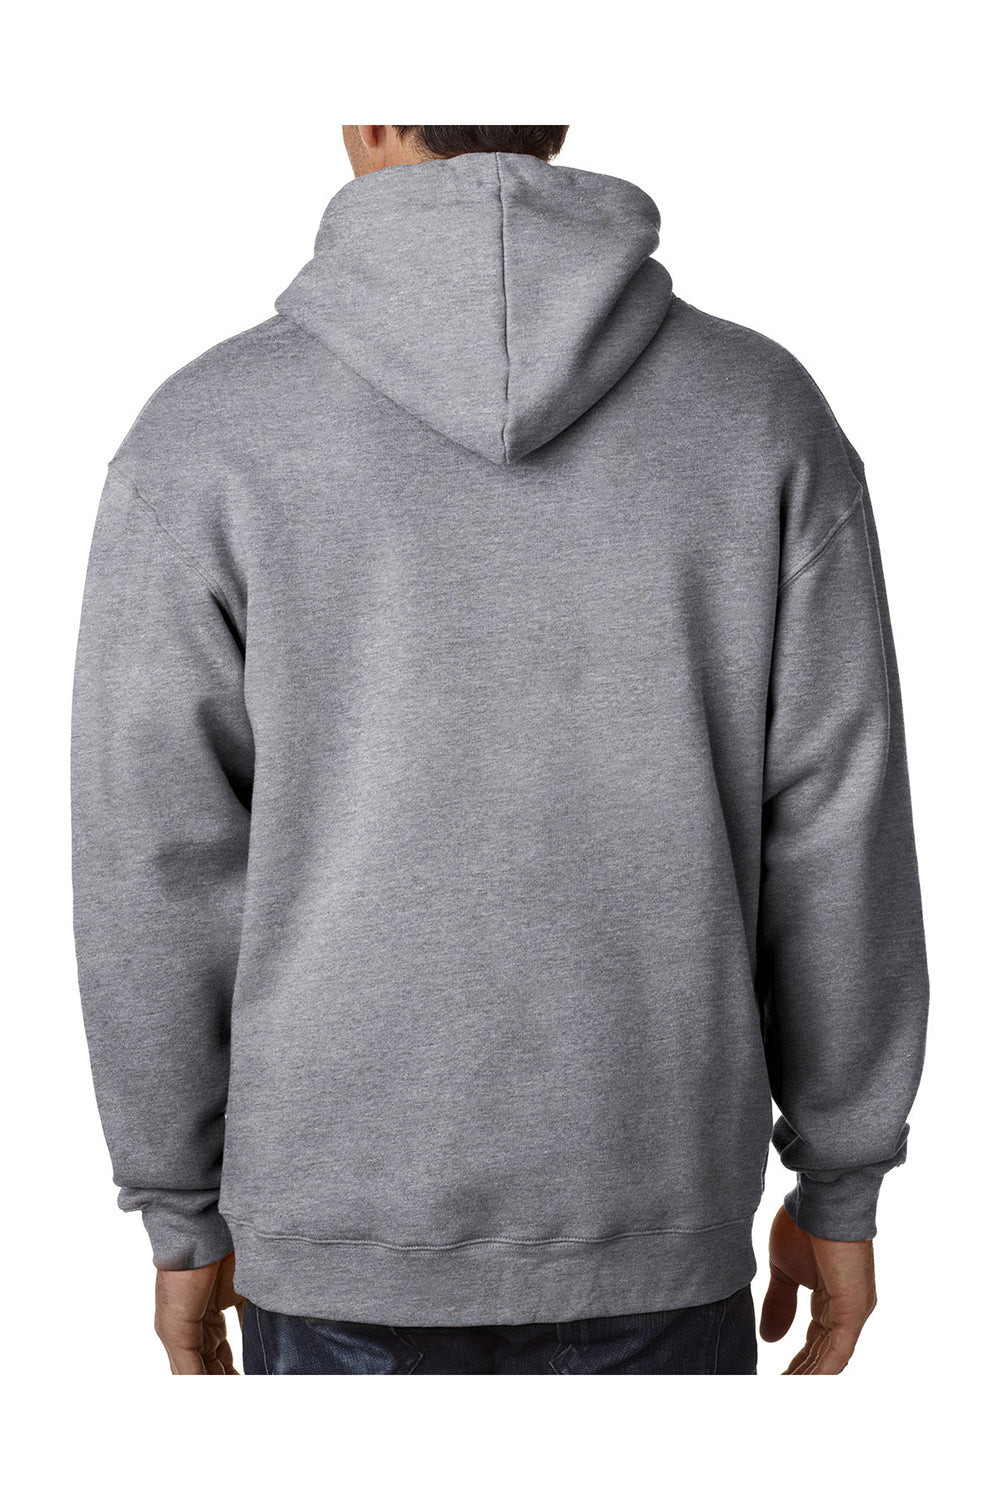 Bayside BA900 Mens USA Made Full Zip Hooded Sweatshirt Hoodie Dark Ash Grey Model Back